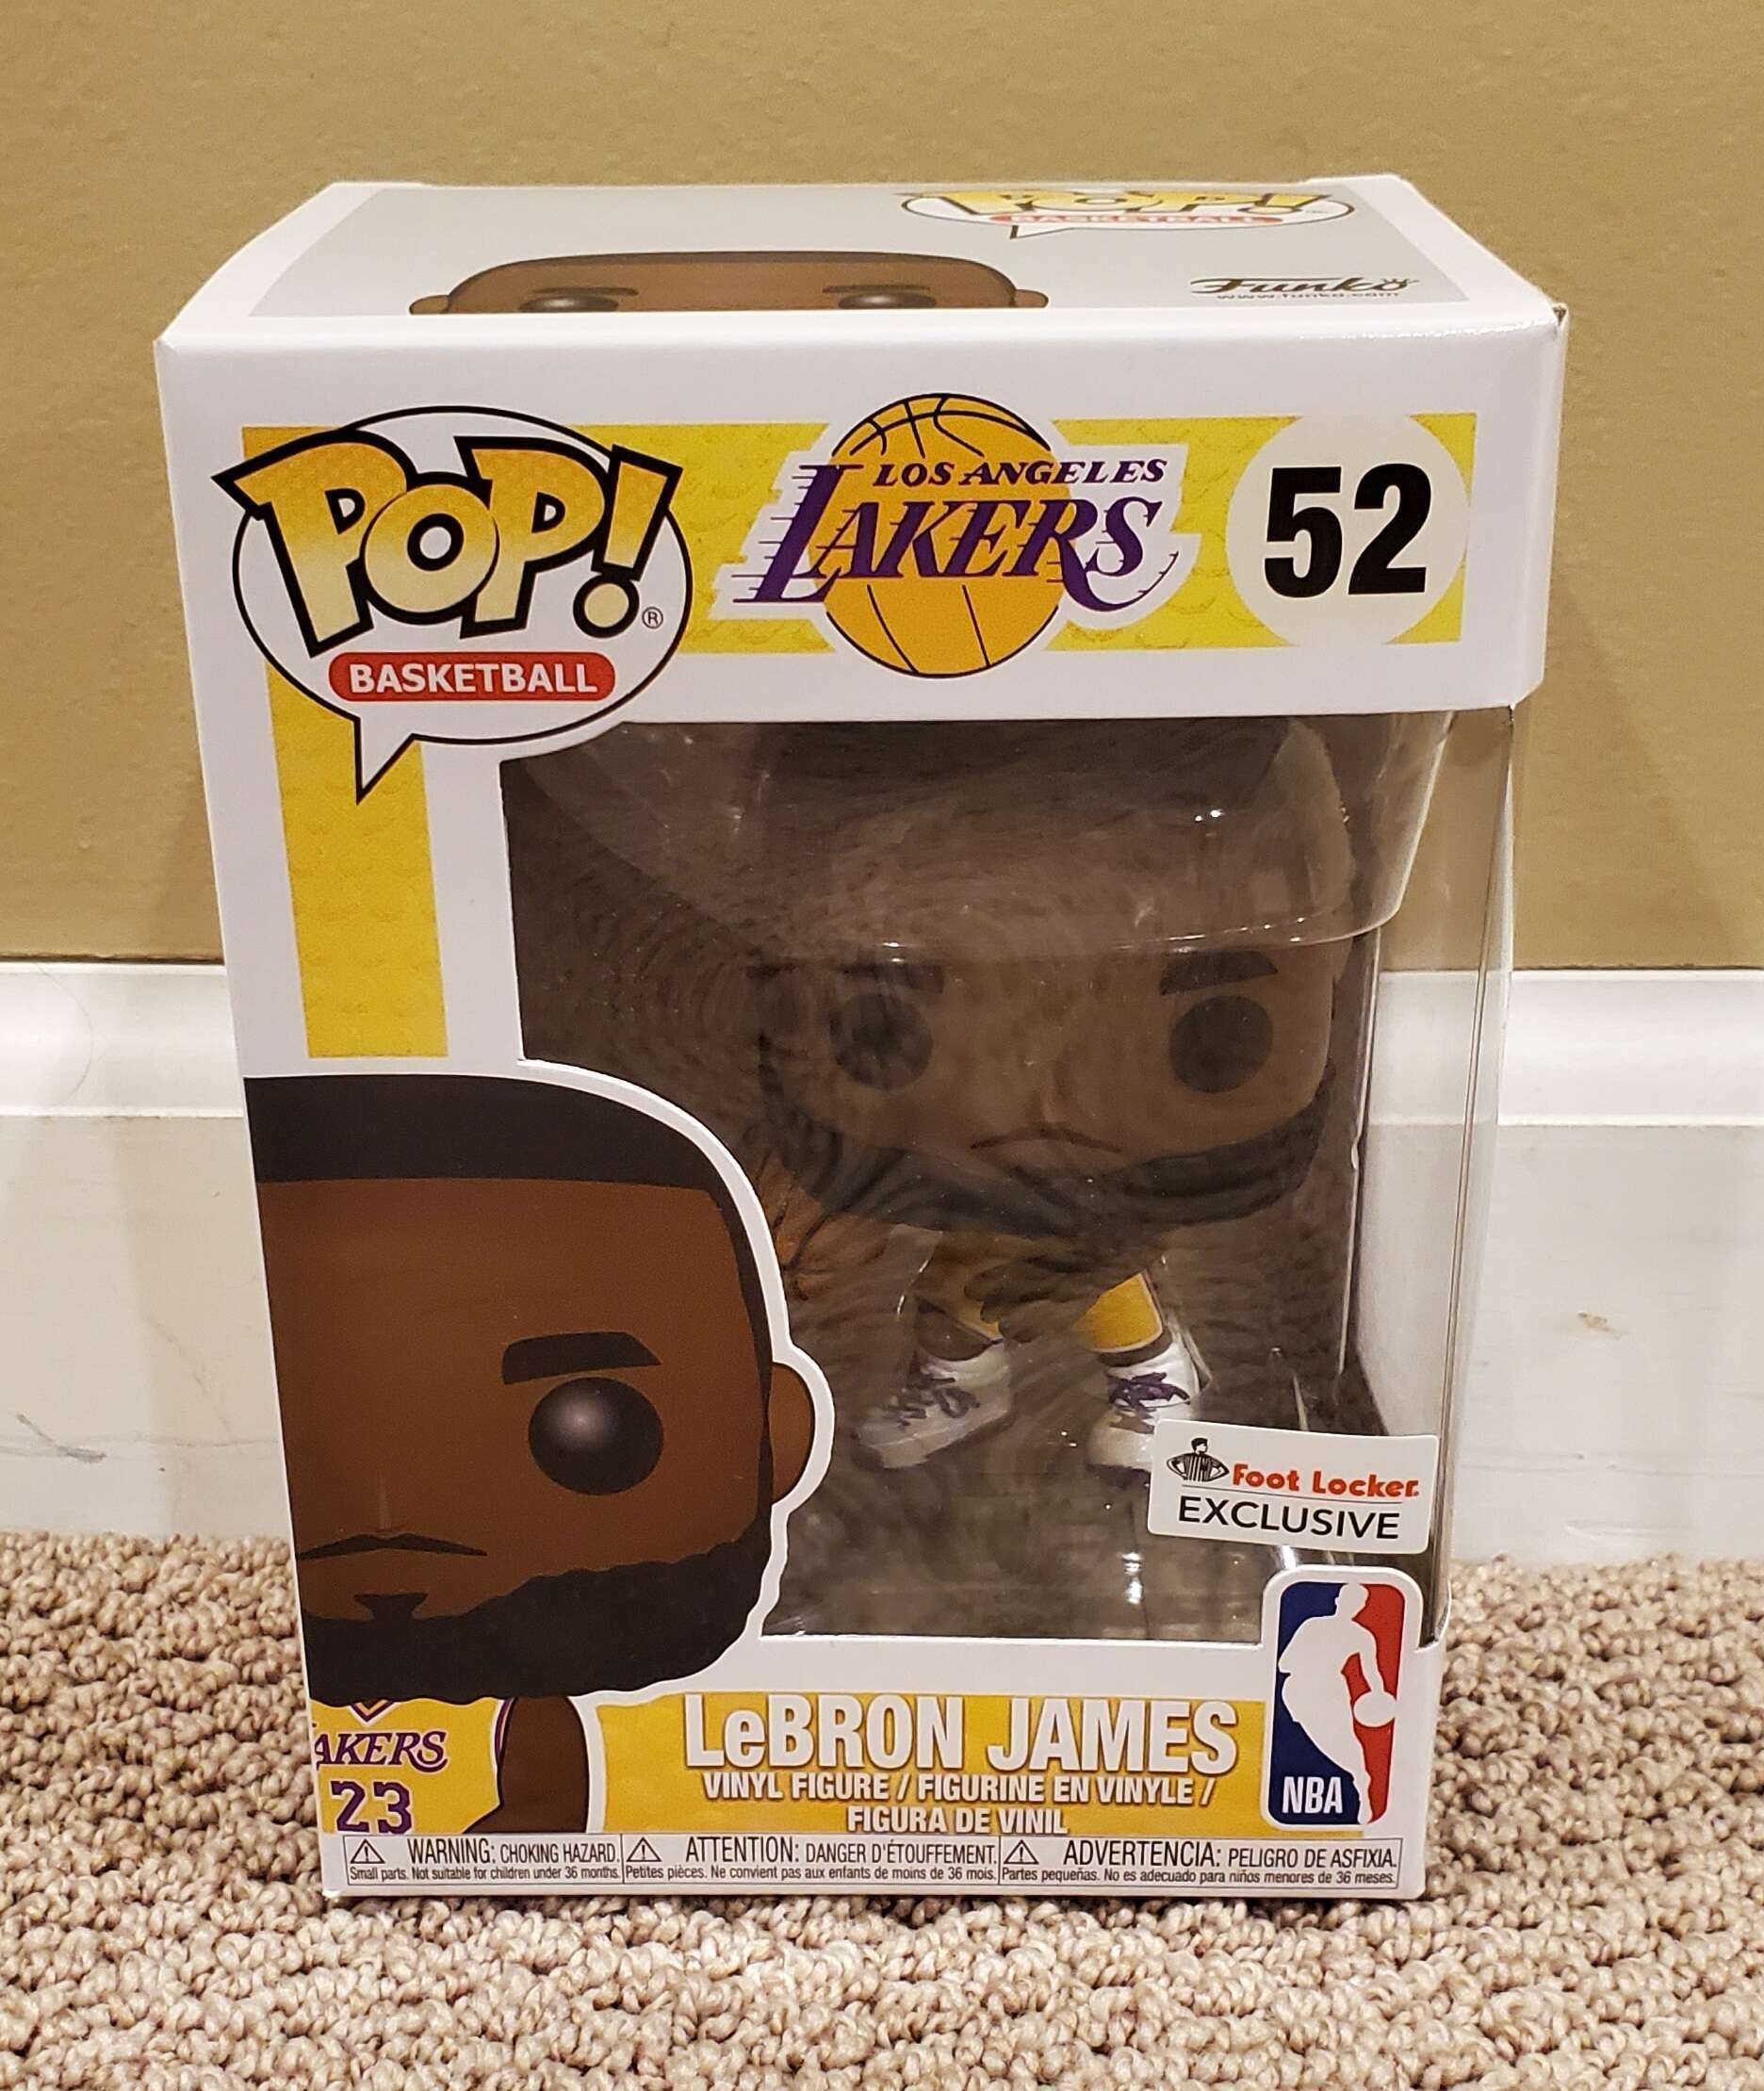 LeBron James (Lakers) (Yellow Jersey)